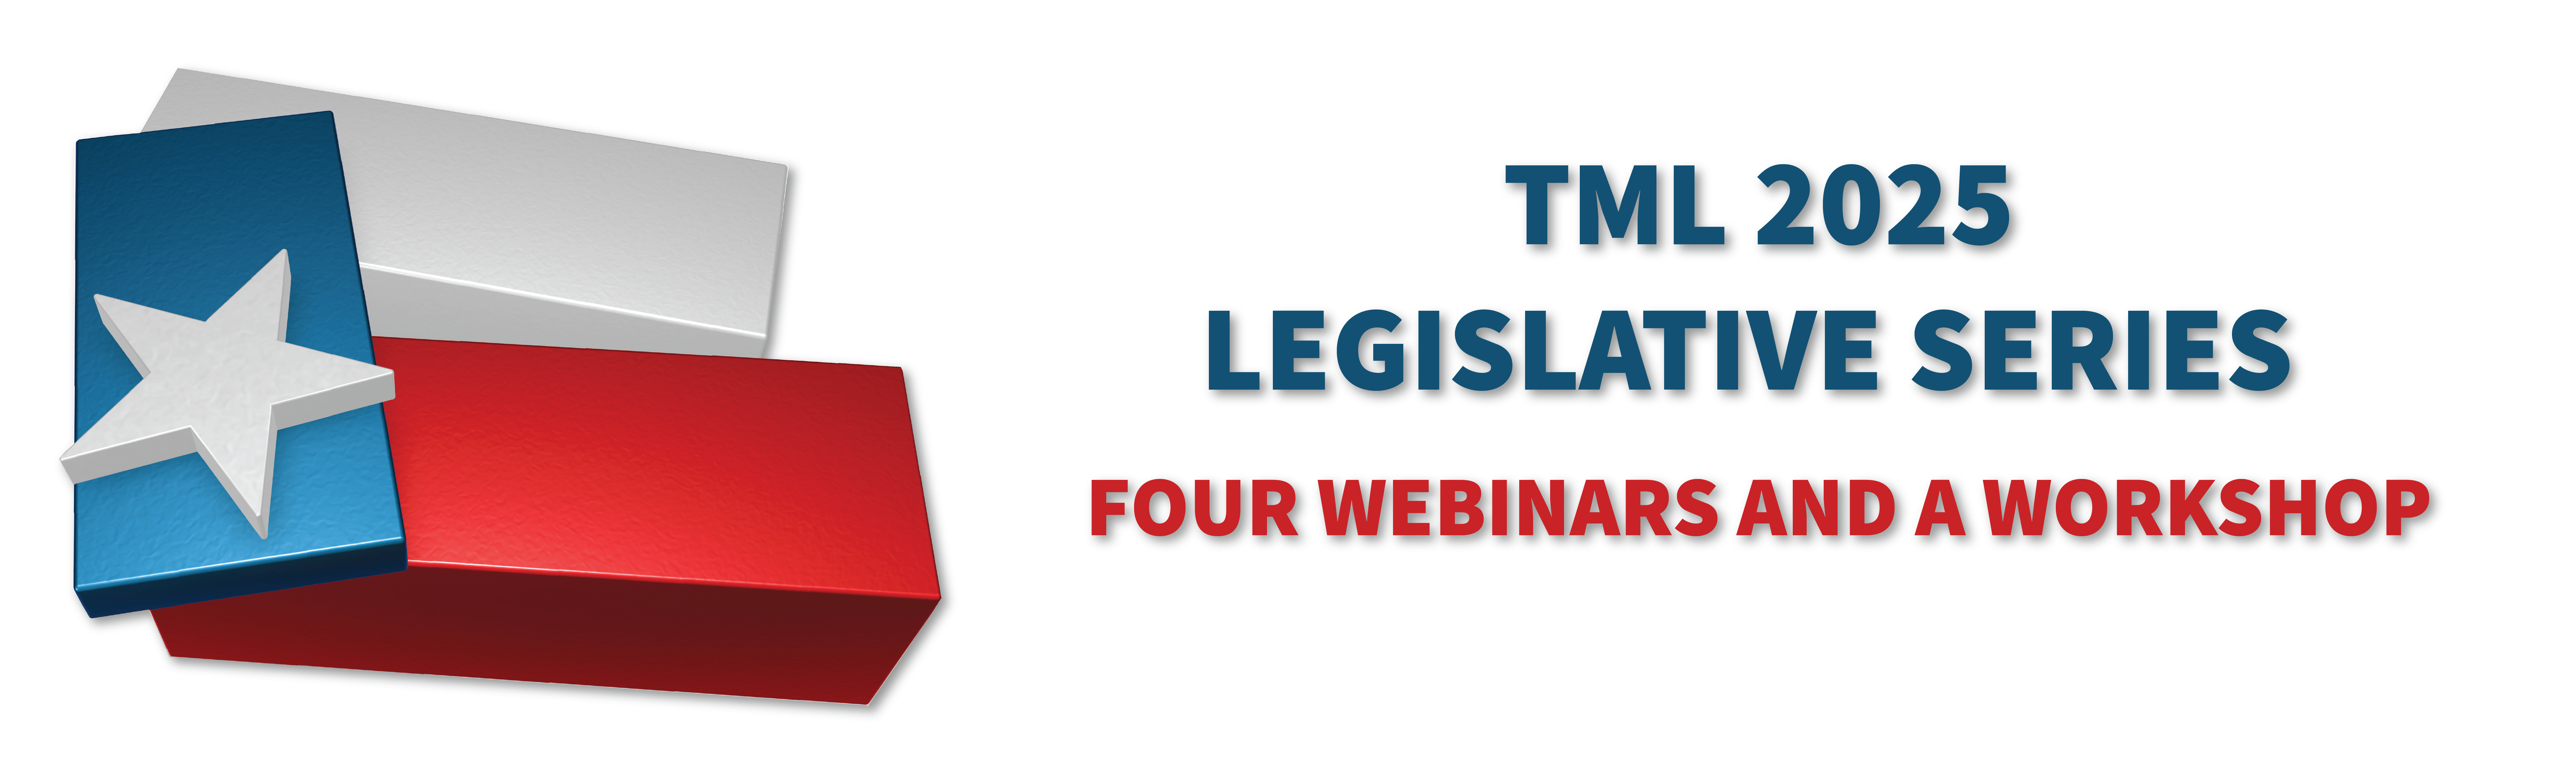 TML Legislative Series